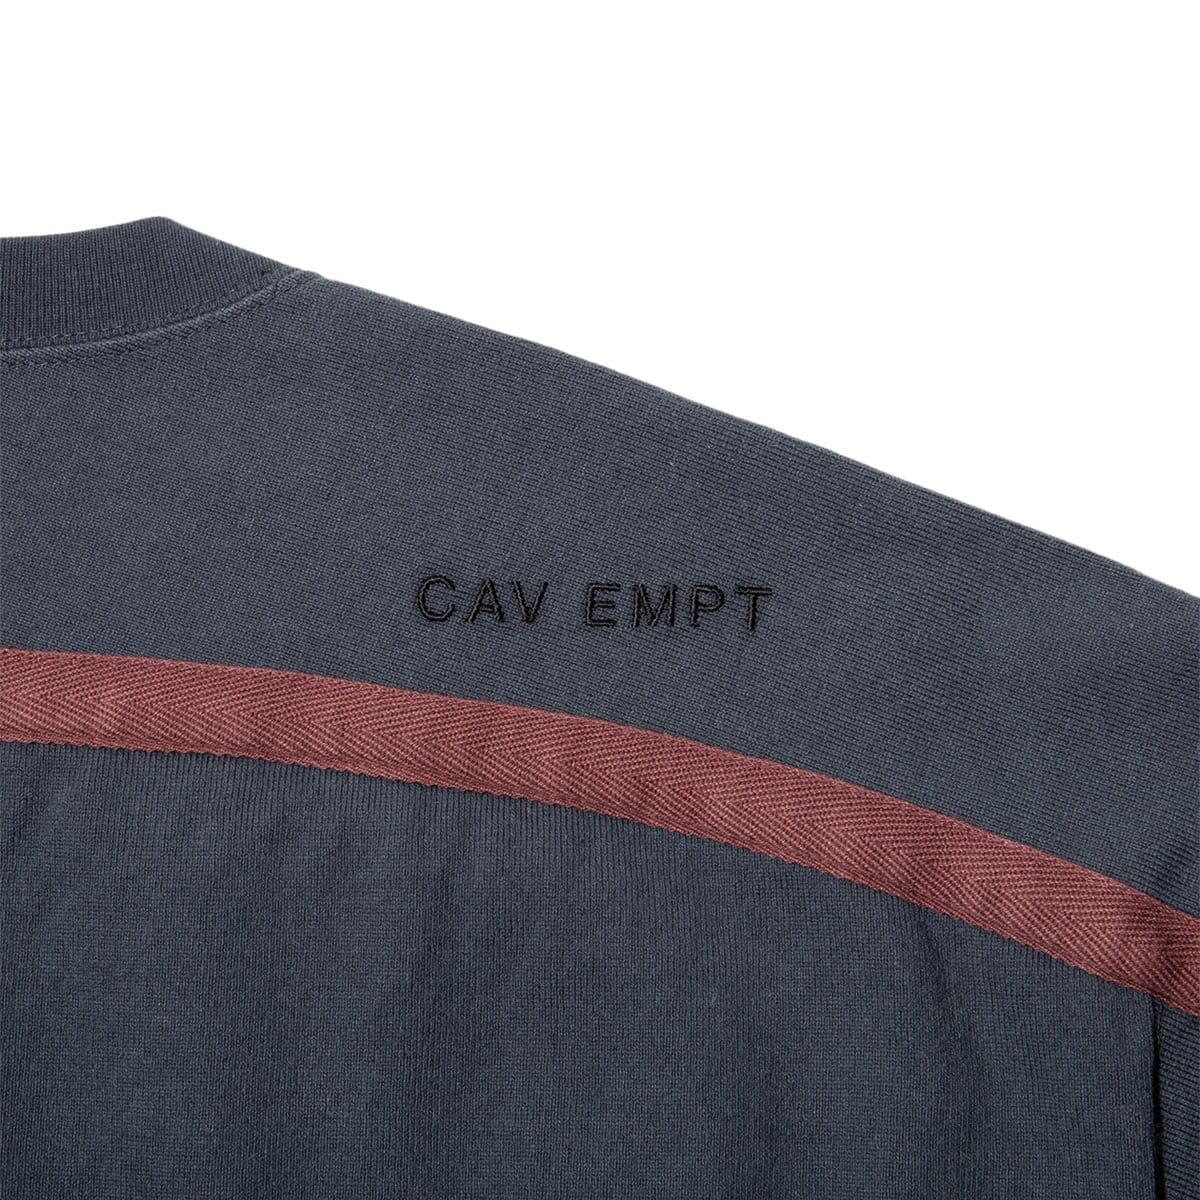 Cav Empt Taped Heavy Long Sleeve Tee Charcoal